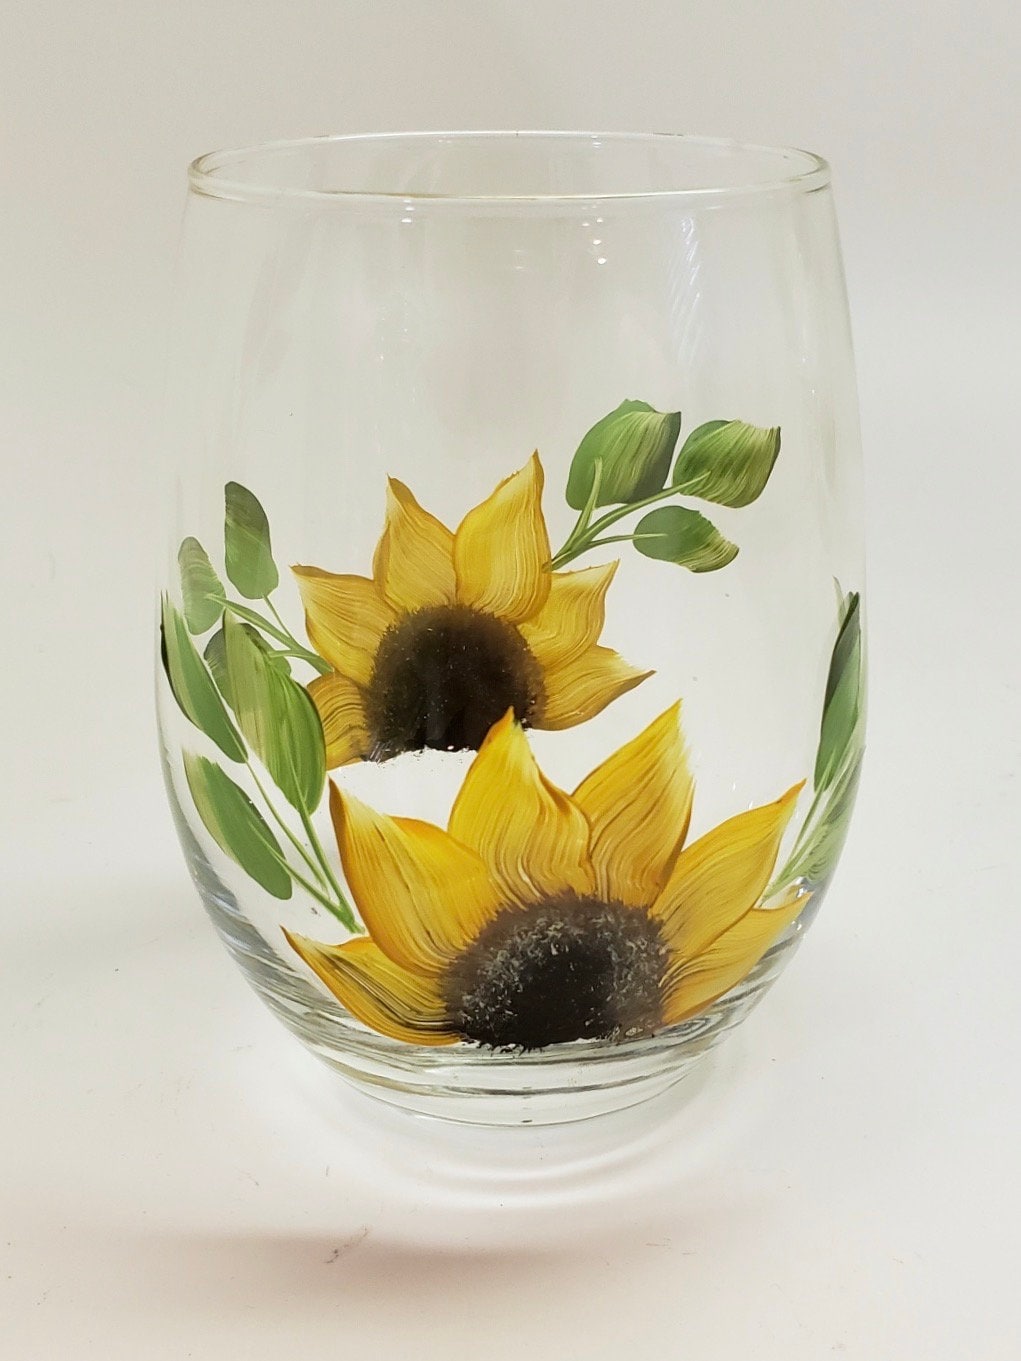 Sunflower Wine Glasses Set of 2 Stemless or Stemmed